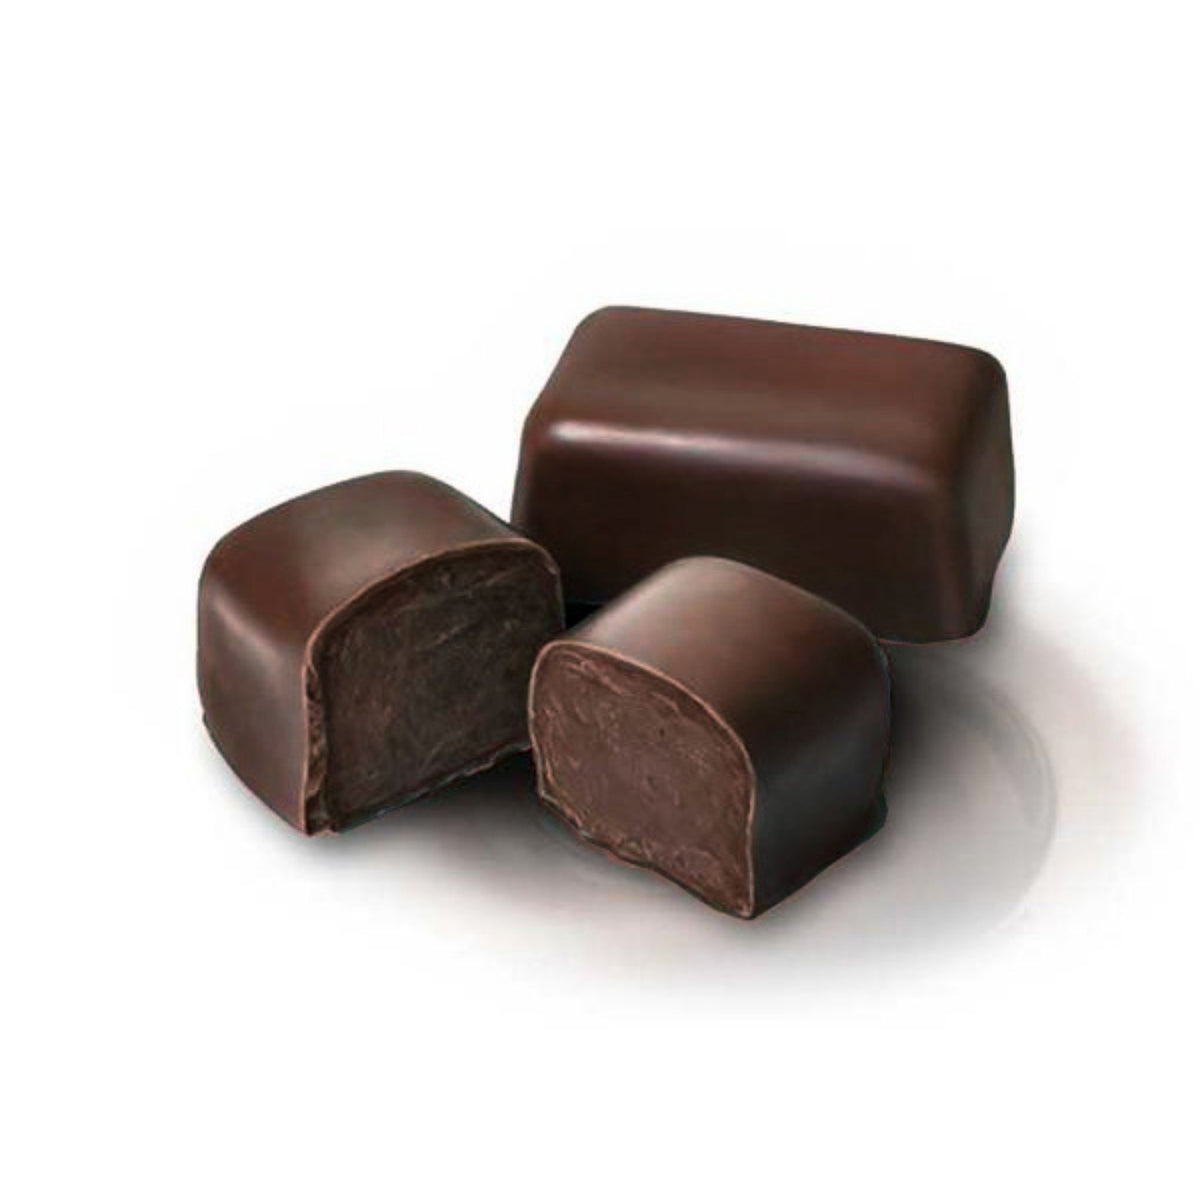 Assorted TruffleCremes in Dark and Milk Chocolate - 16 oz